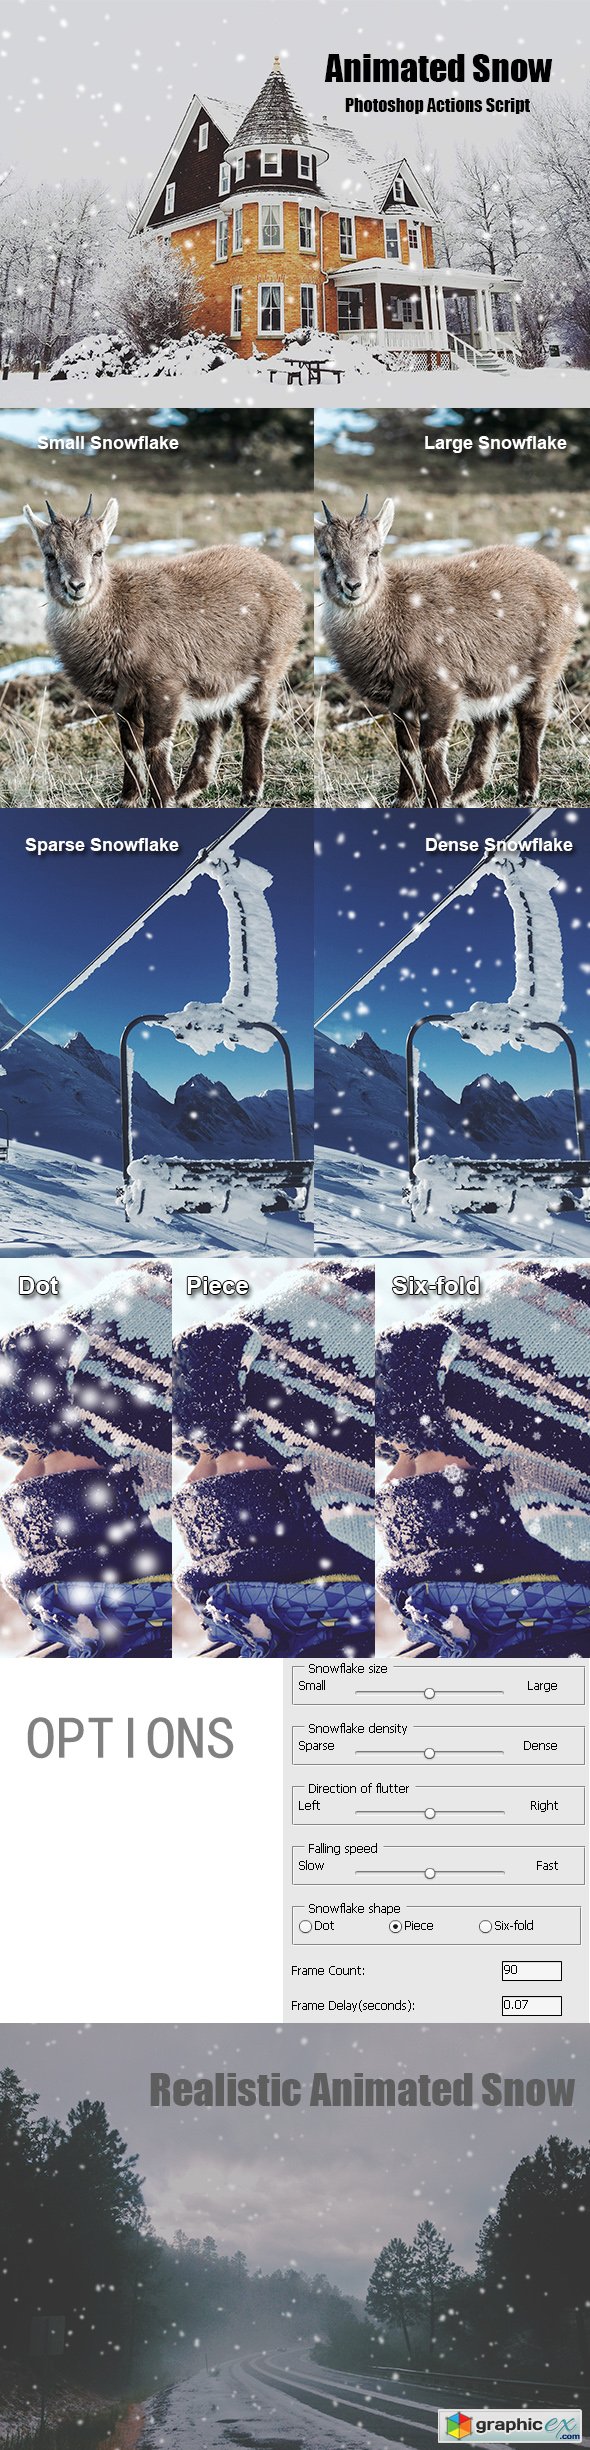 Animated Snow Photoshop Add-on